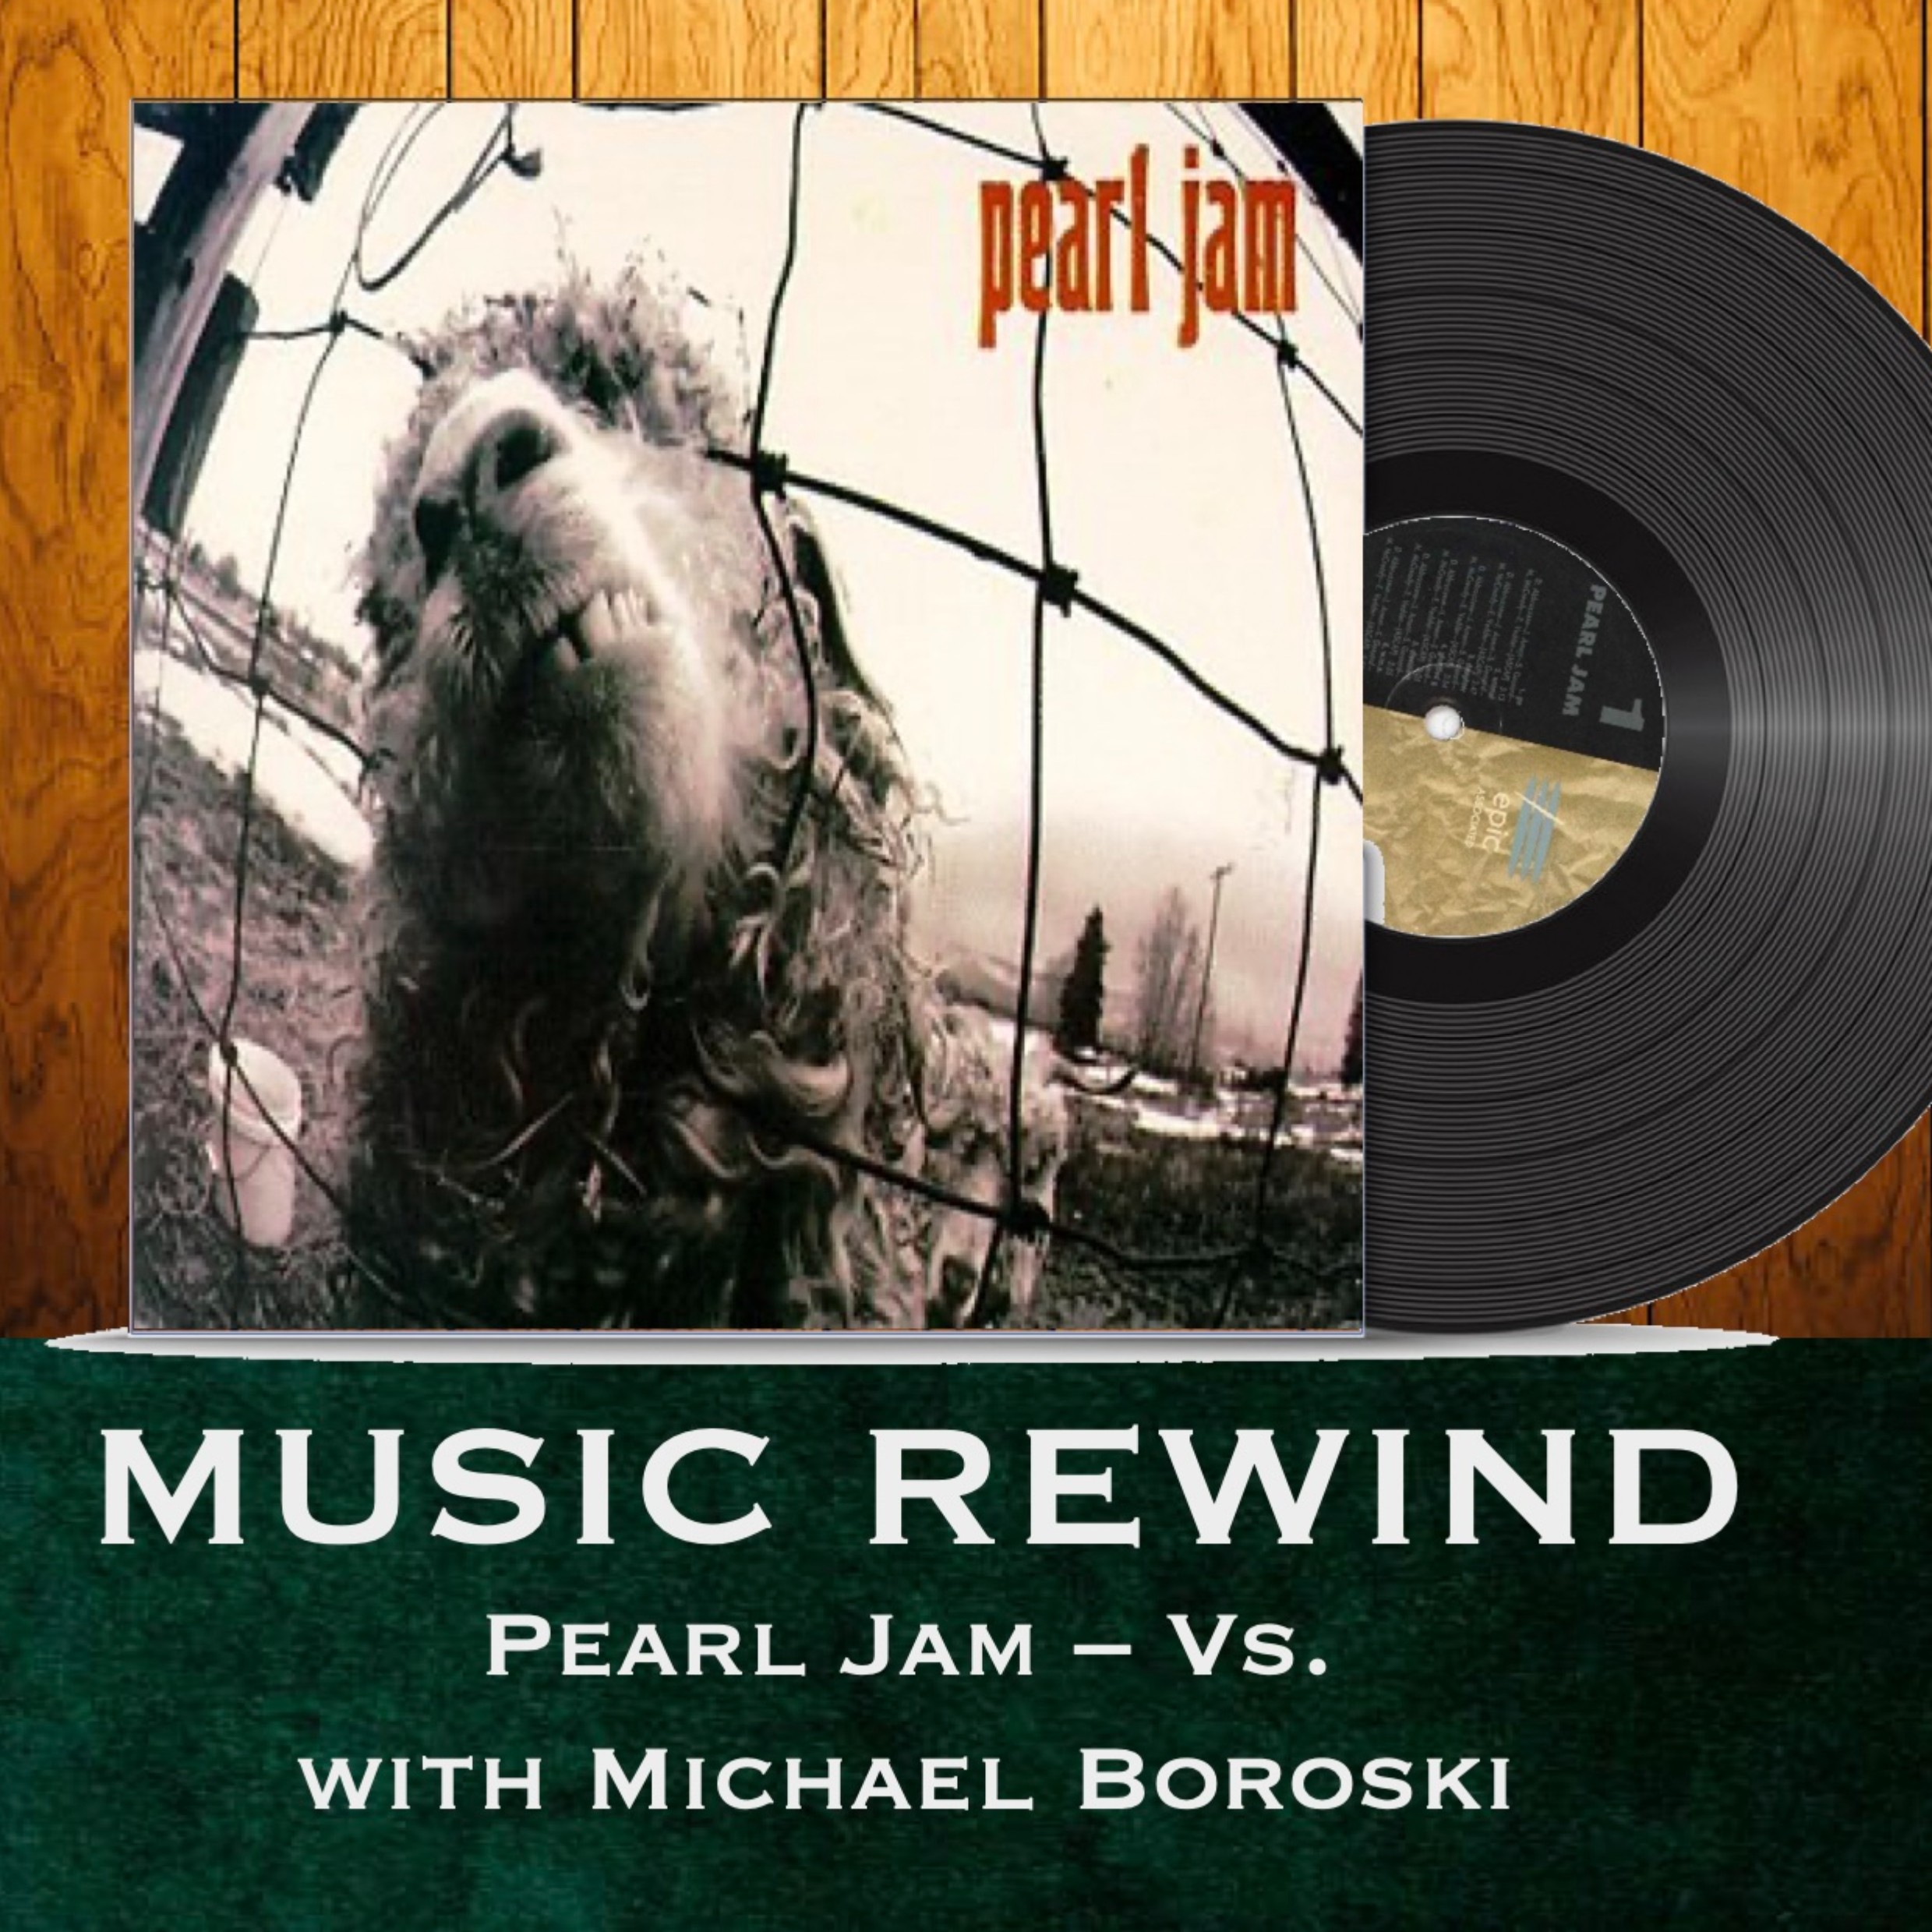 Pearl Jam Vs. with Michael Boroski